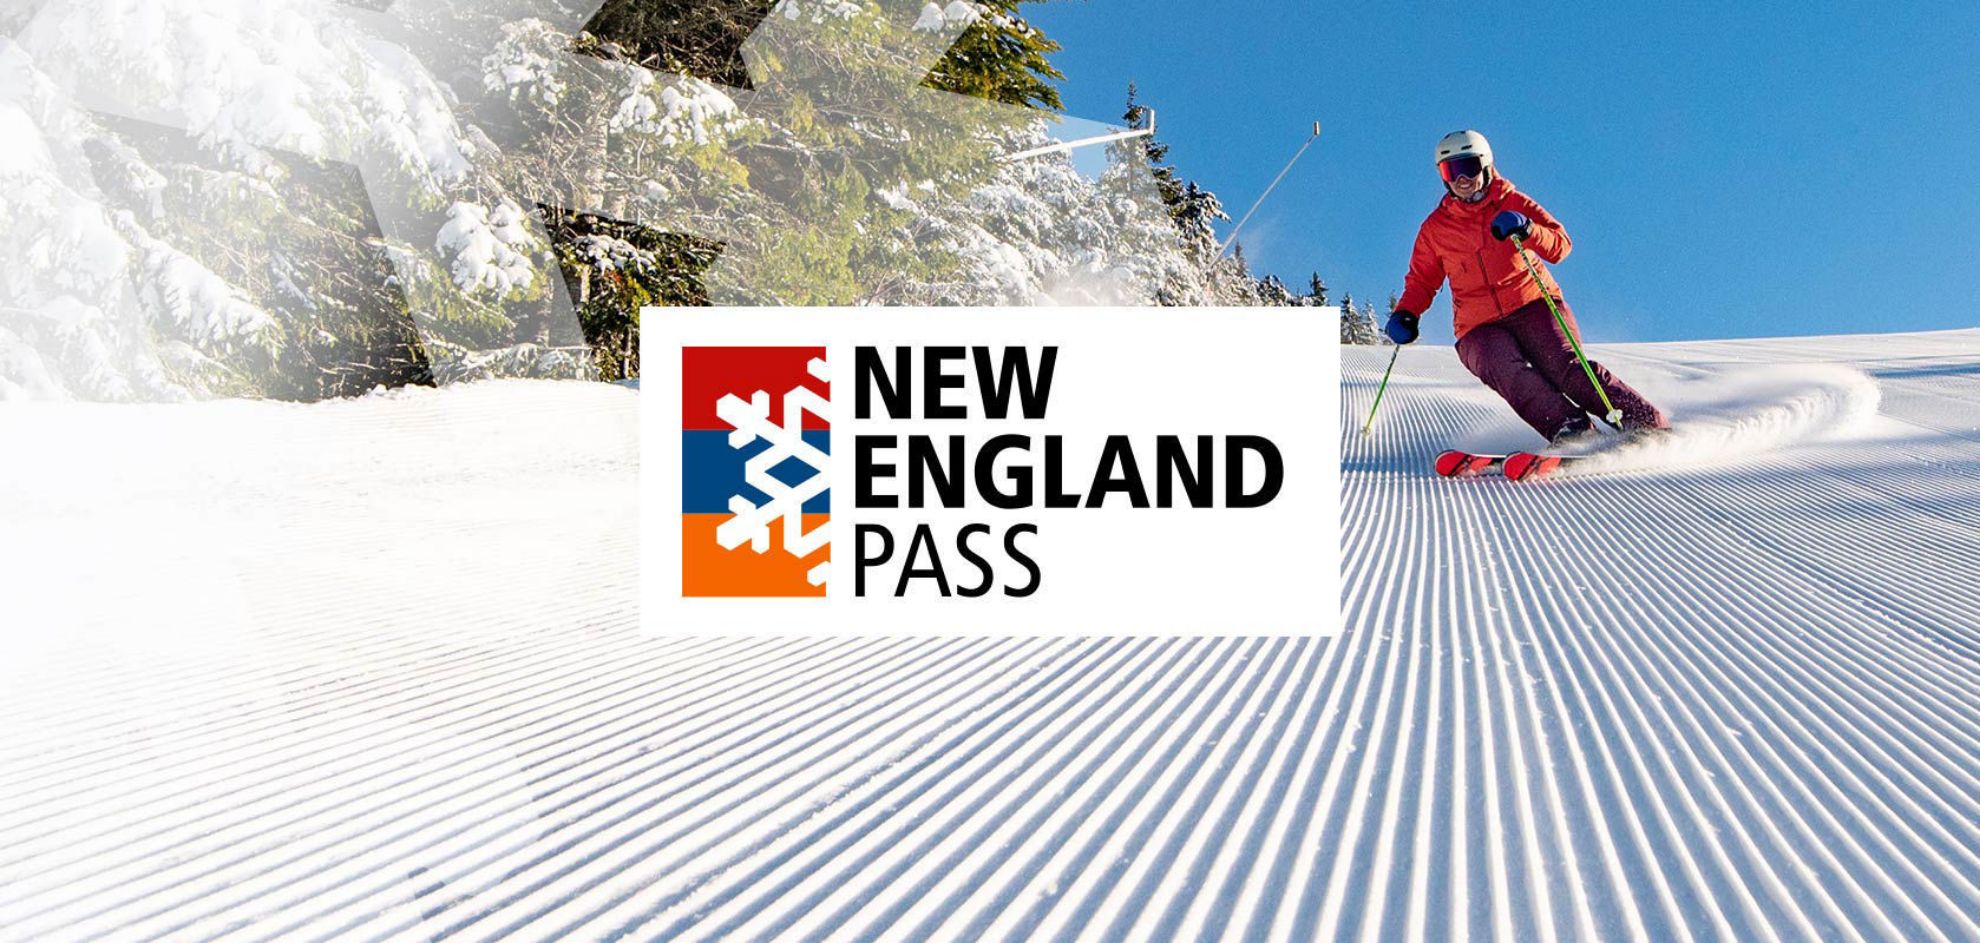 Skier on corduroy; New England Pass graphic logo over image